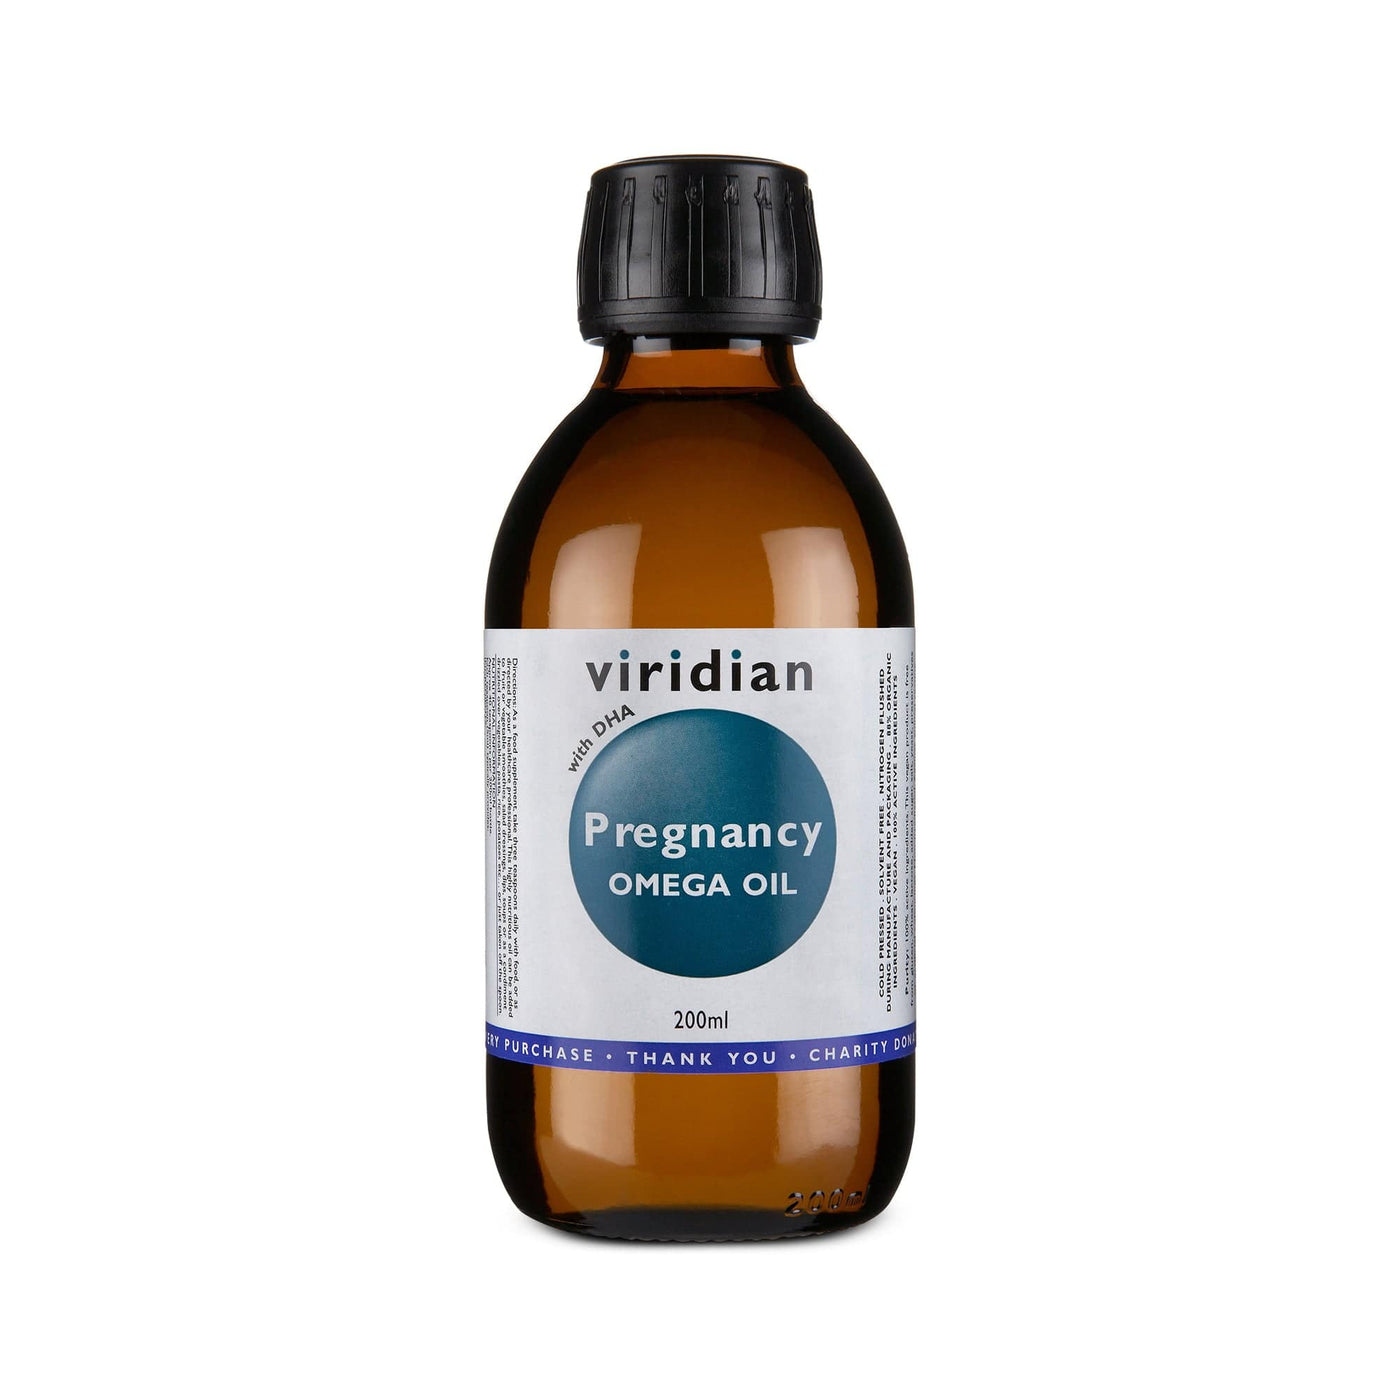 Neal's Yard Remedies Viridian Pregnancy Omega Oil 200ml